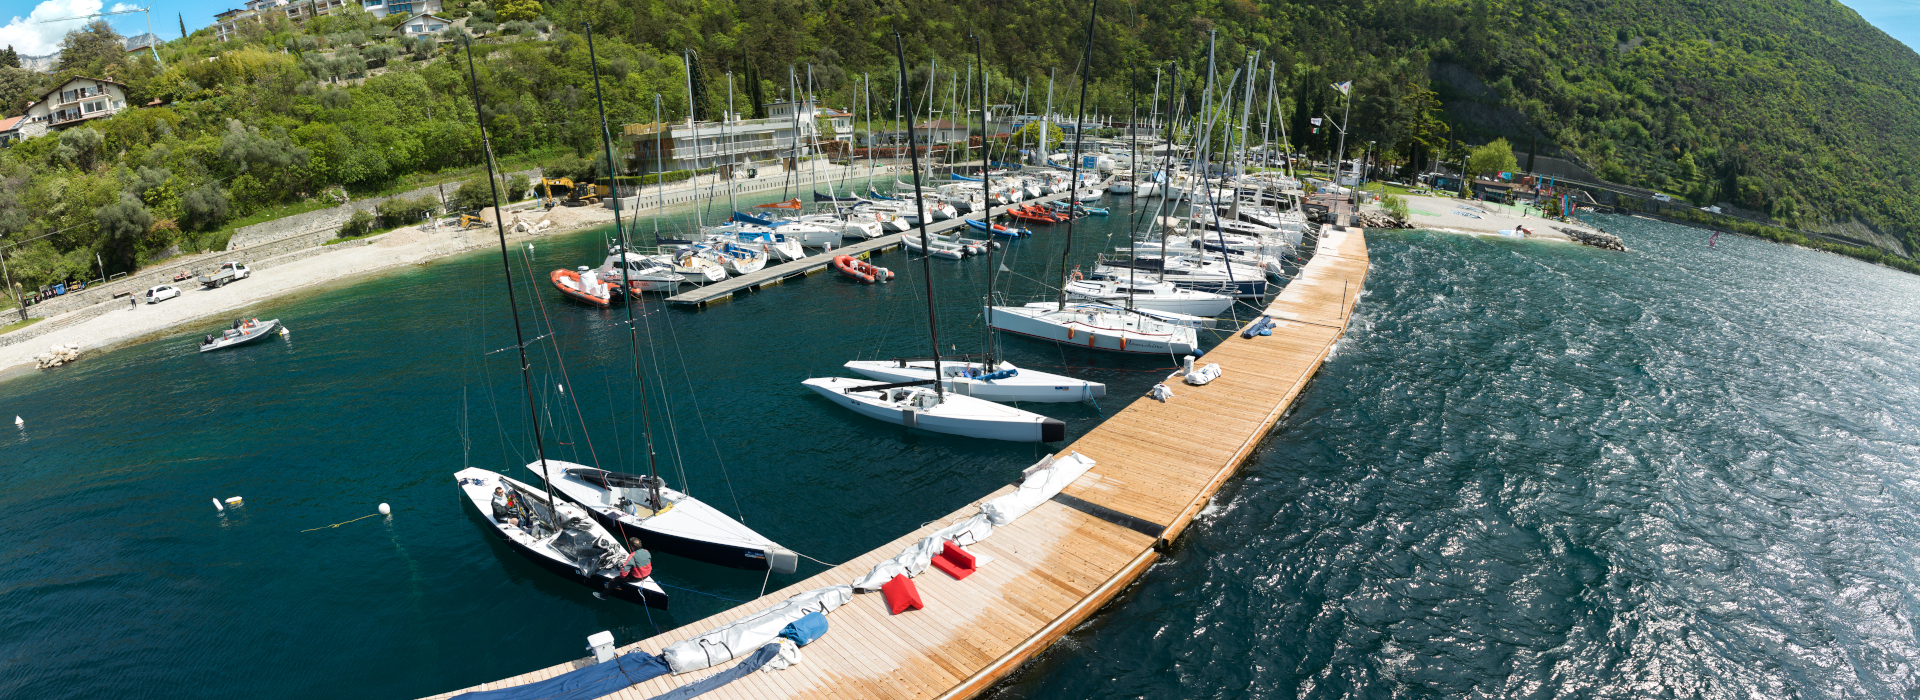 Sailing Courses, Nautical Licenses and Boat Rentals on Lake Garda | Circolo Vela Torbole